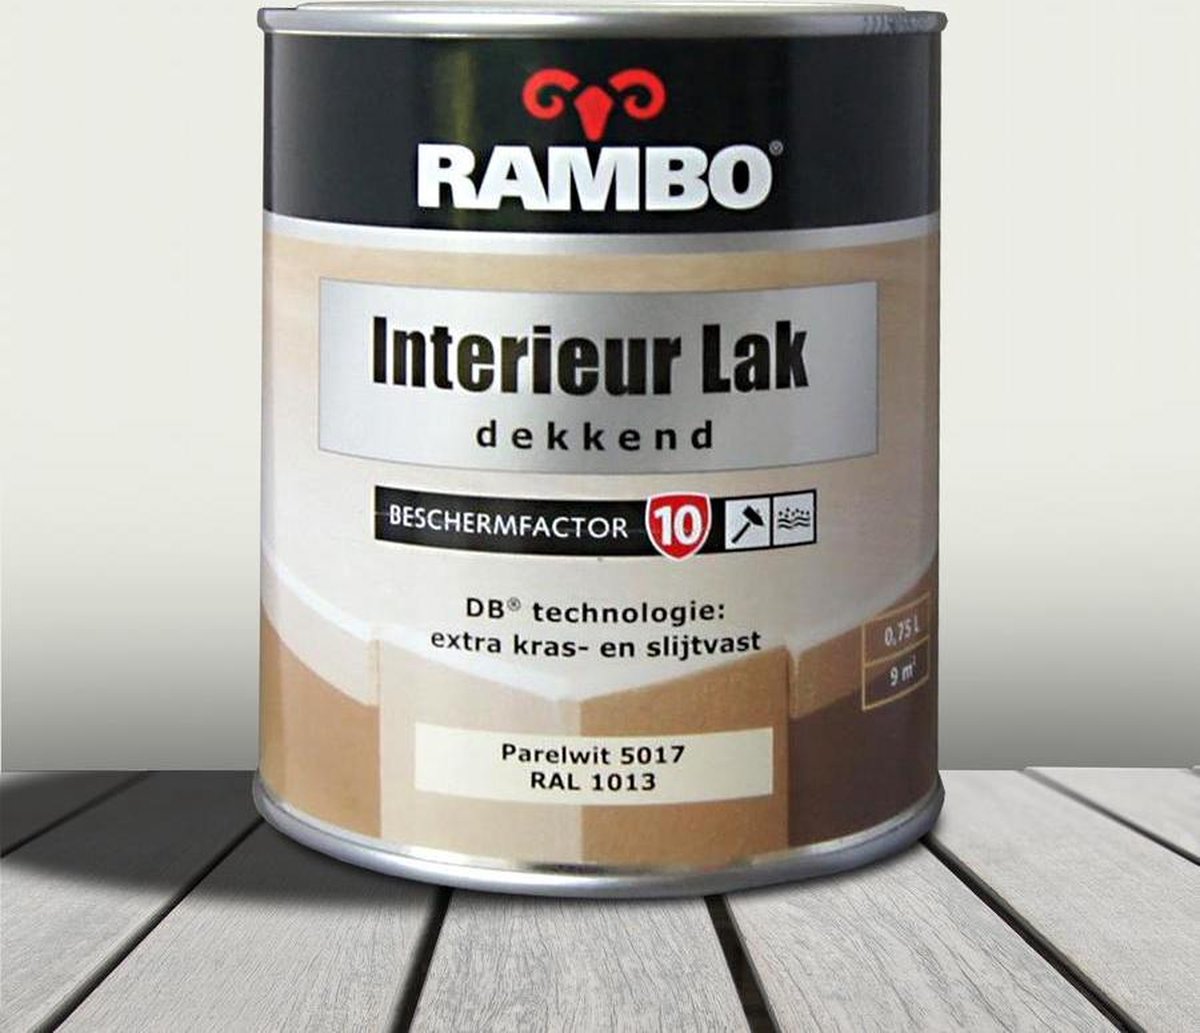 Rambo Interieur Lak Dekkend 0,75 liter - Parelwit (RAL 1013)